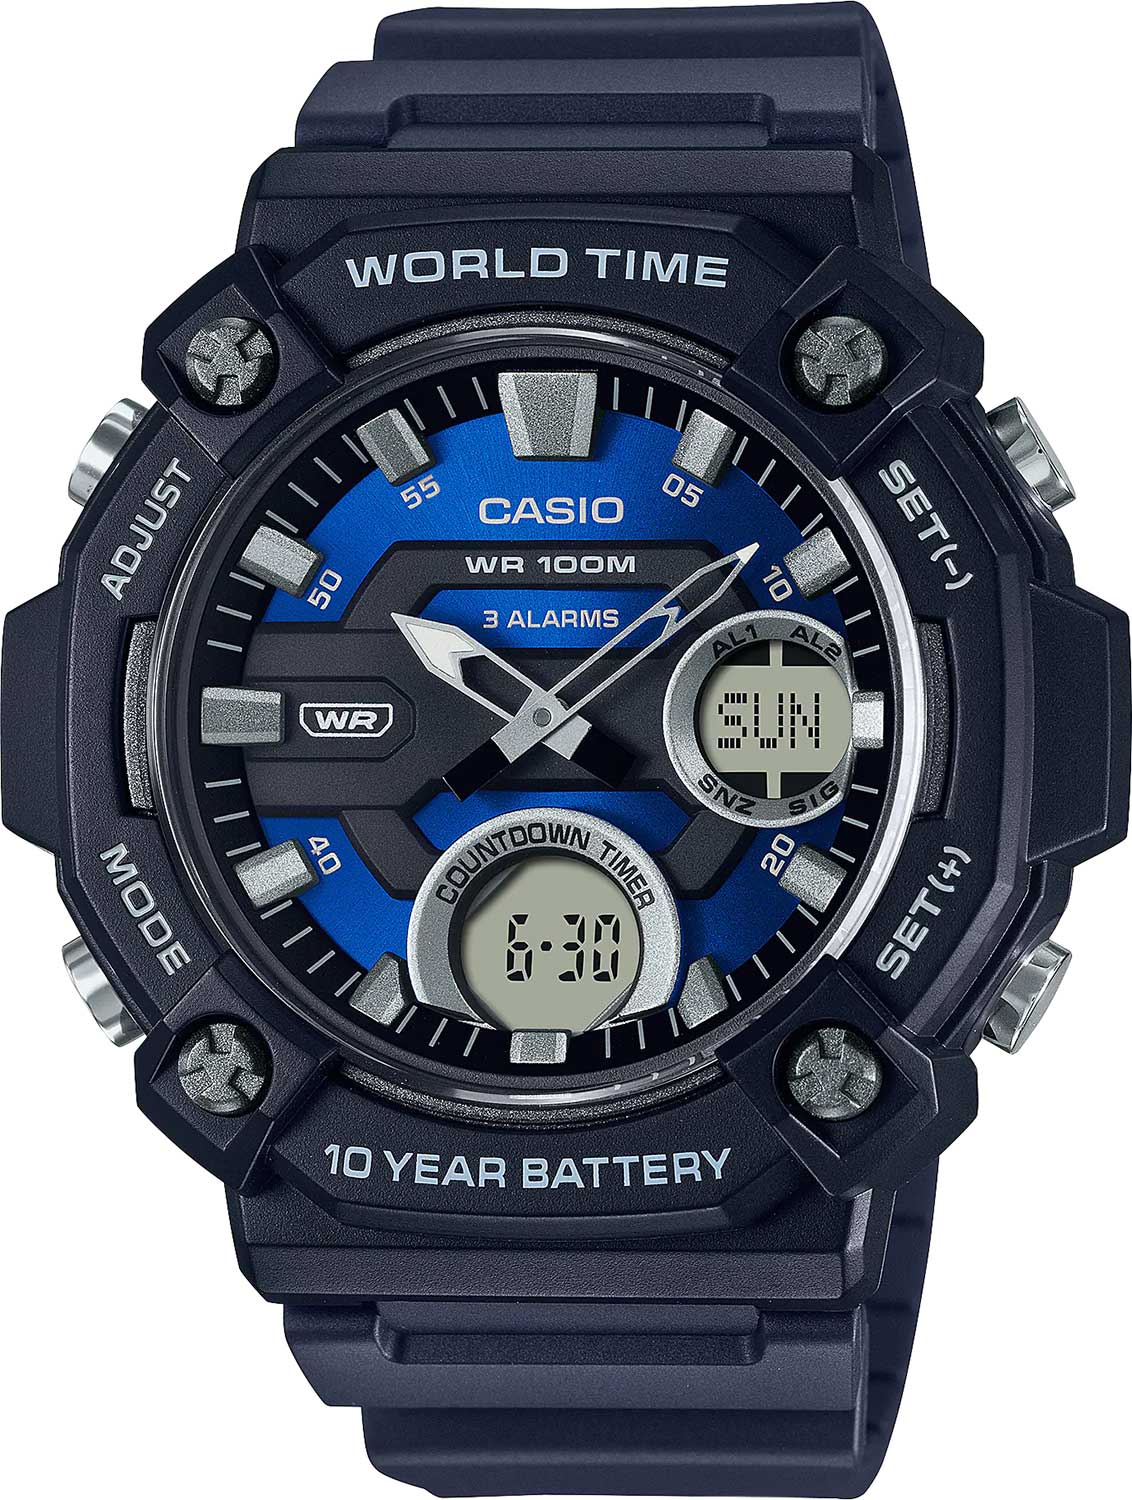 Наручные часы Casio AEQ-120W-2A наручные часы casio aeq 120w 2a синий черный